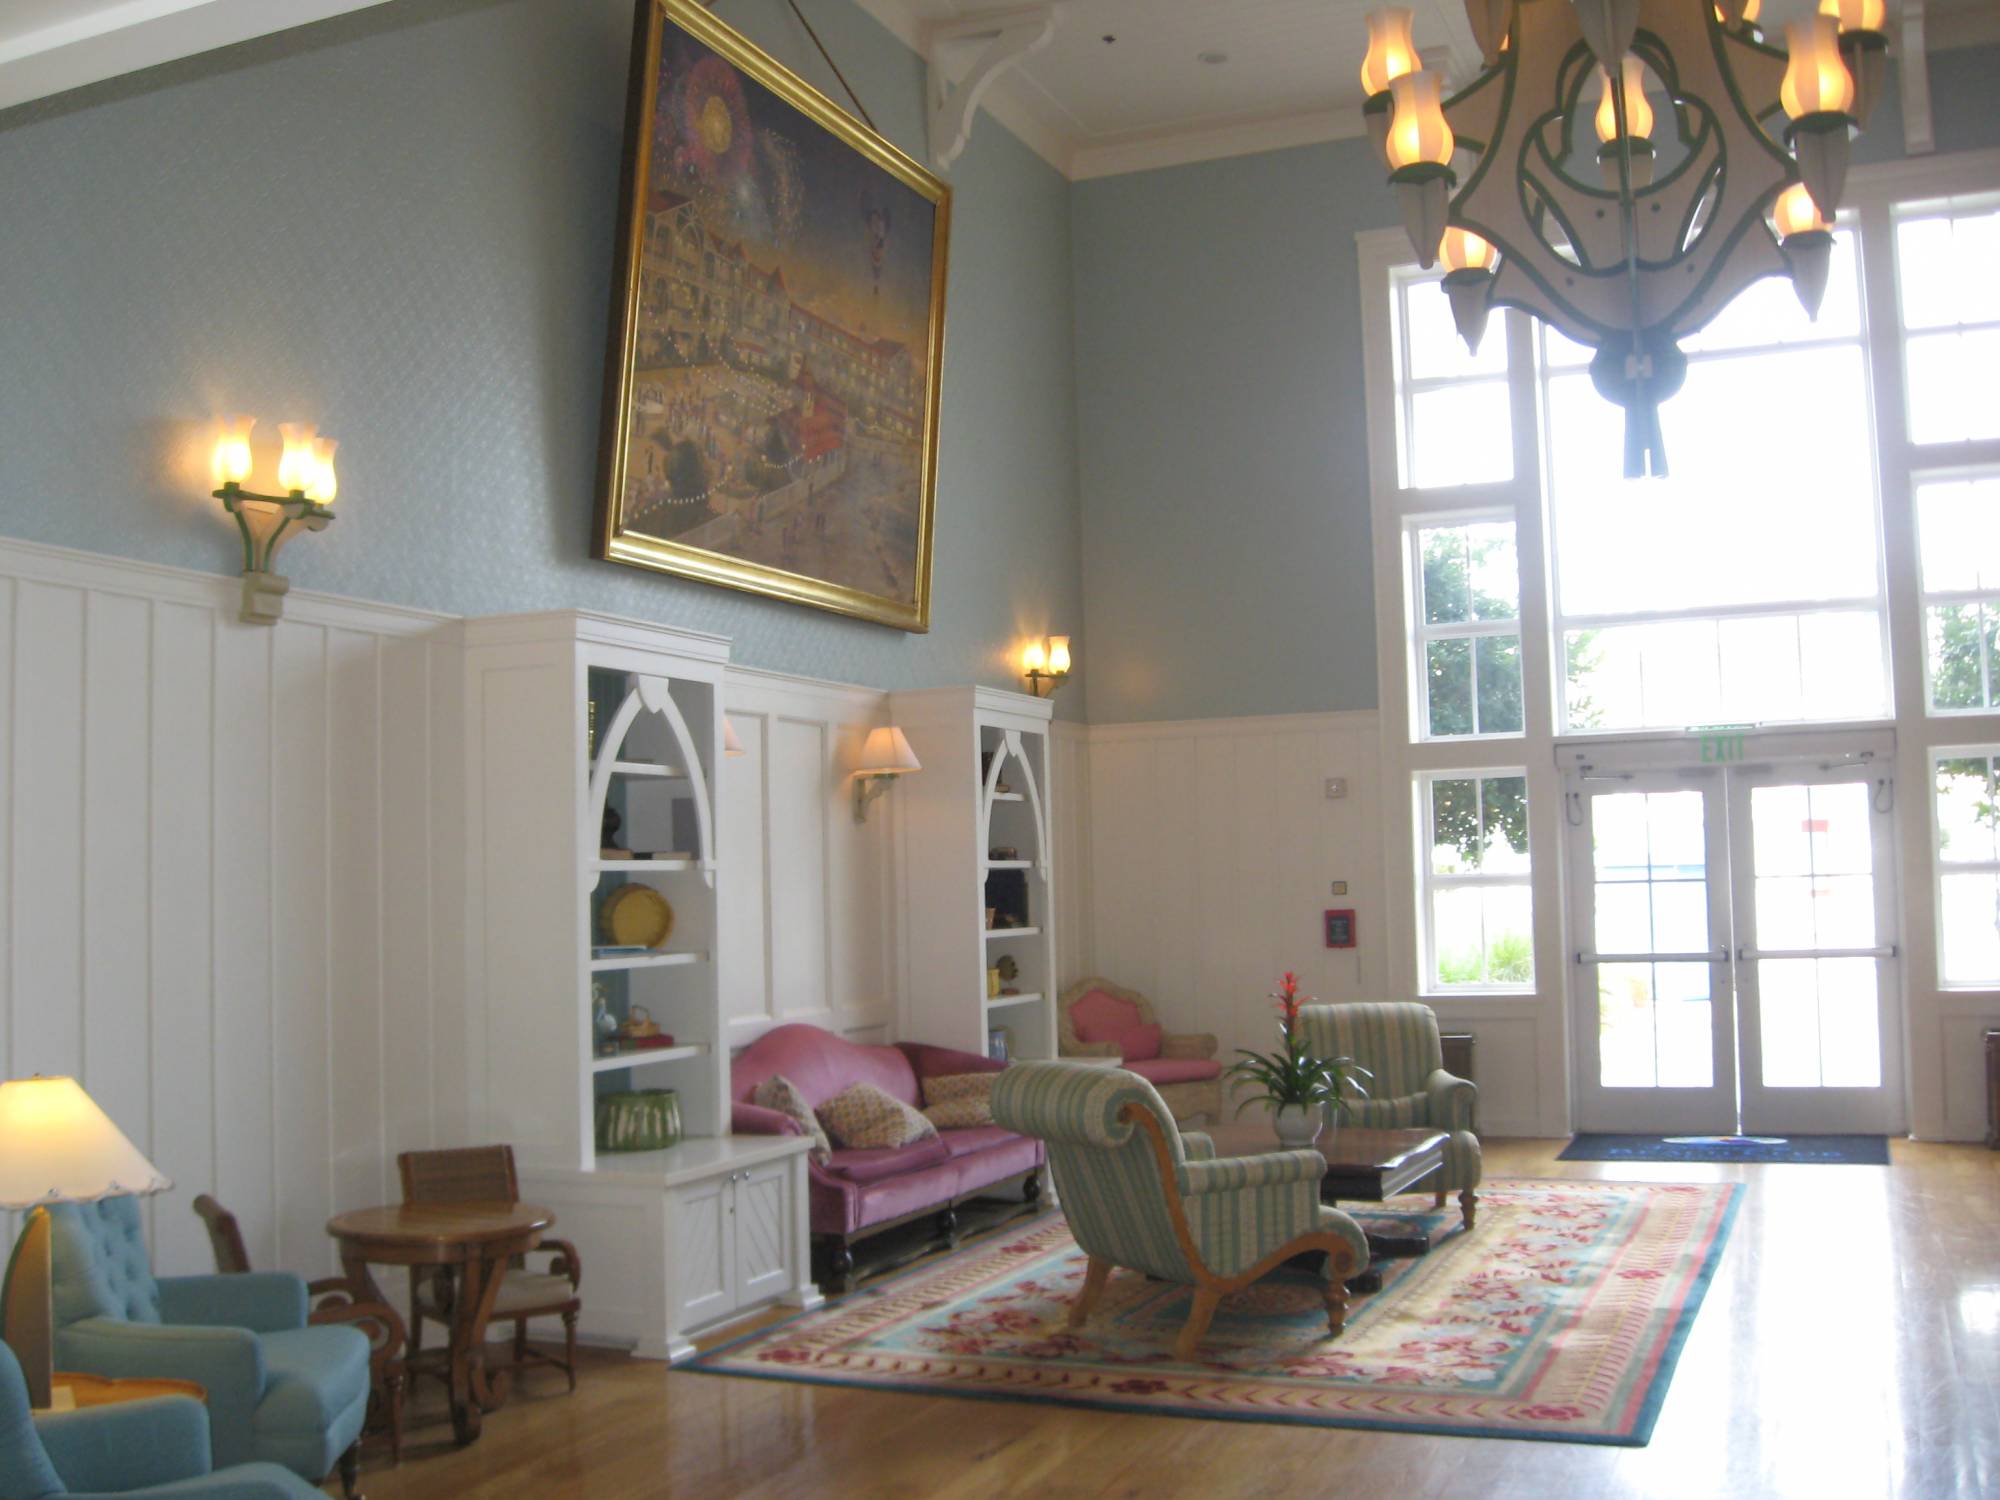 Sitting Room in the Villas